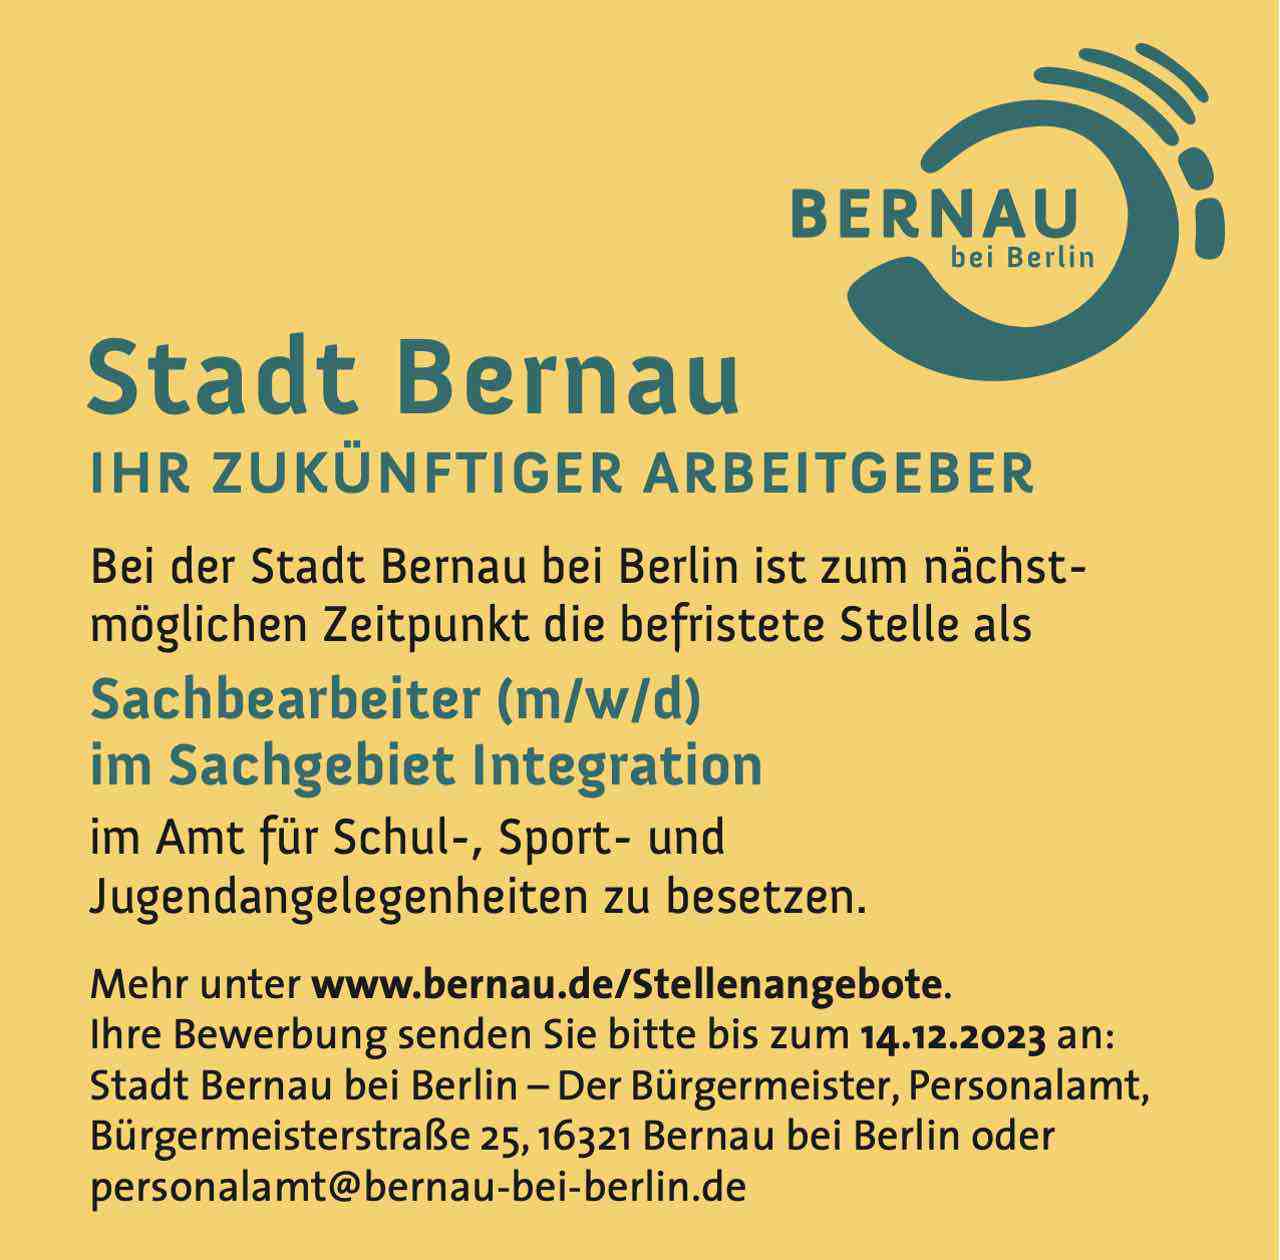 Stadt Bernau Sachbearbeiter (m/w/d) im Sachgebiet Integration